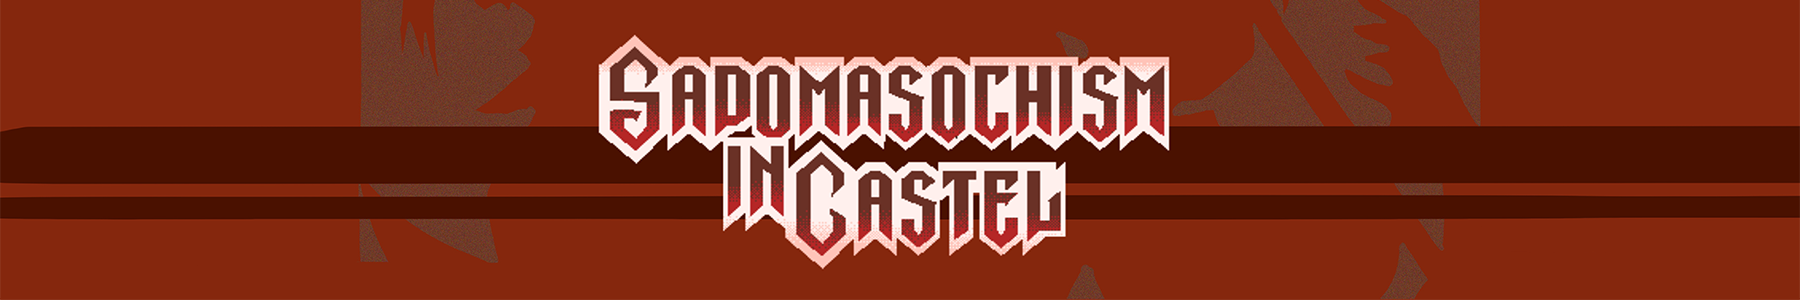 Sadomasochism in Castle